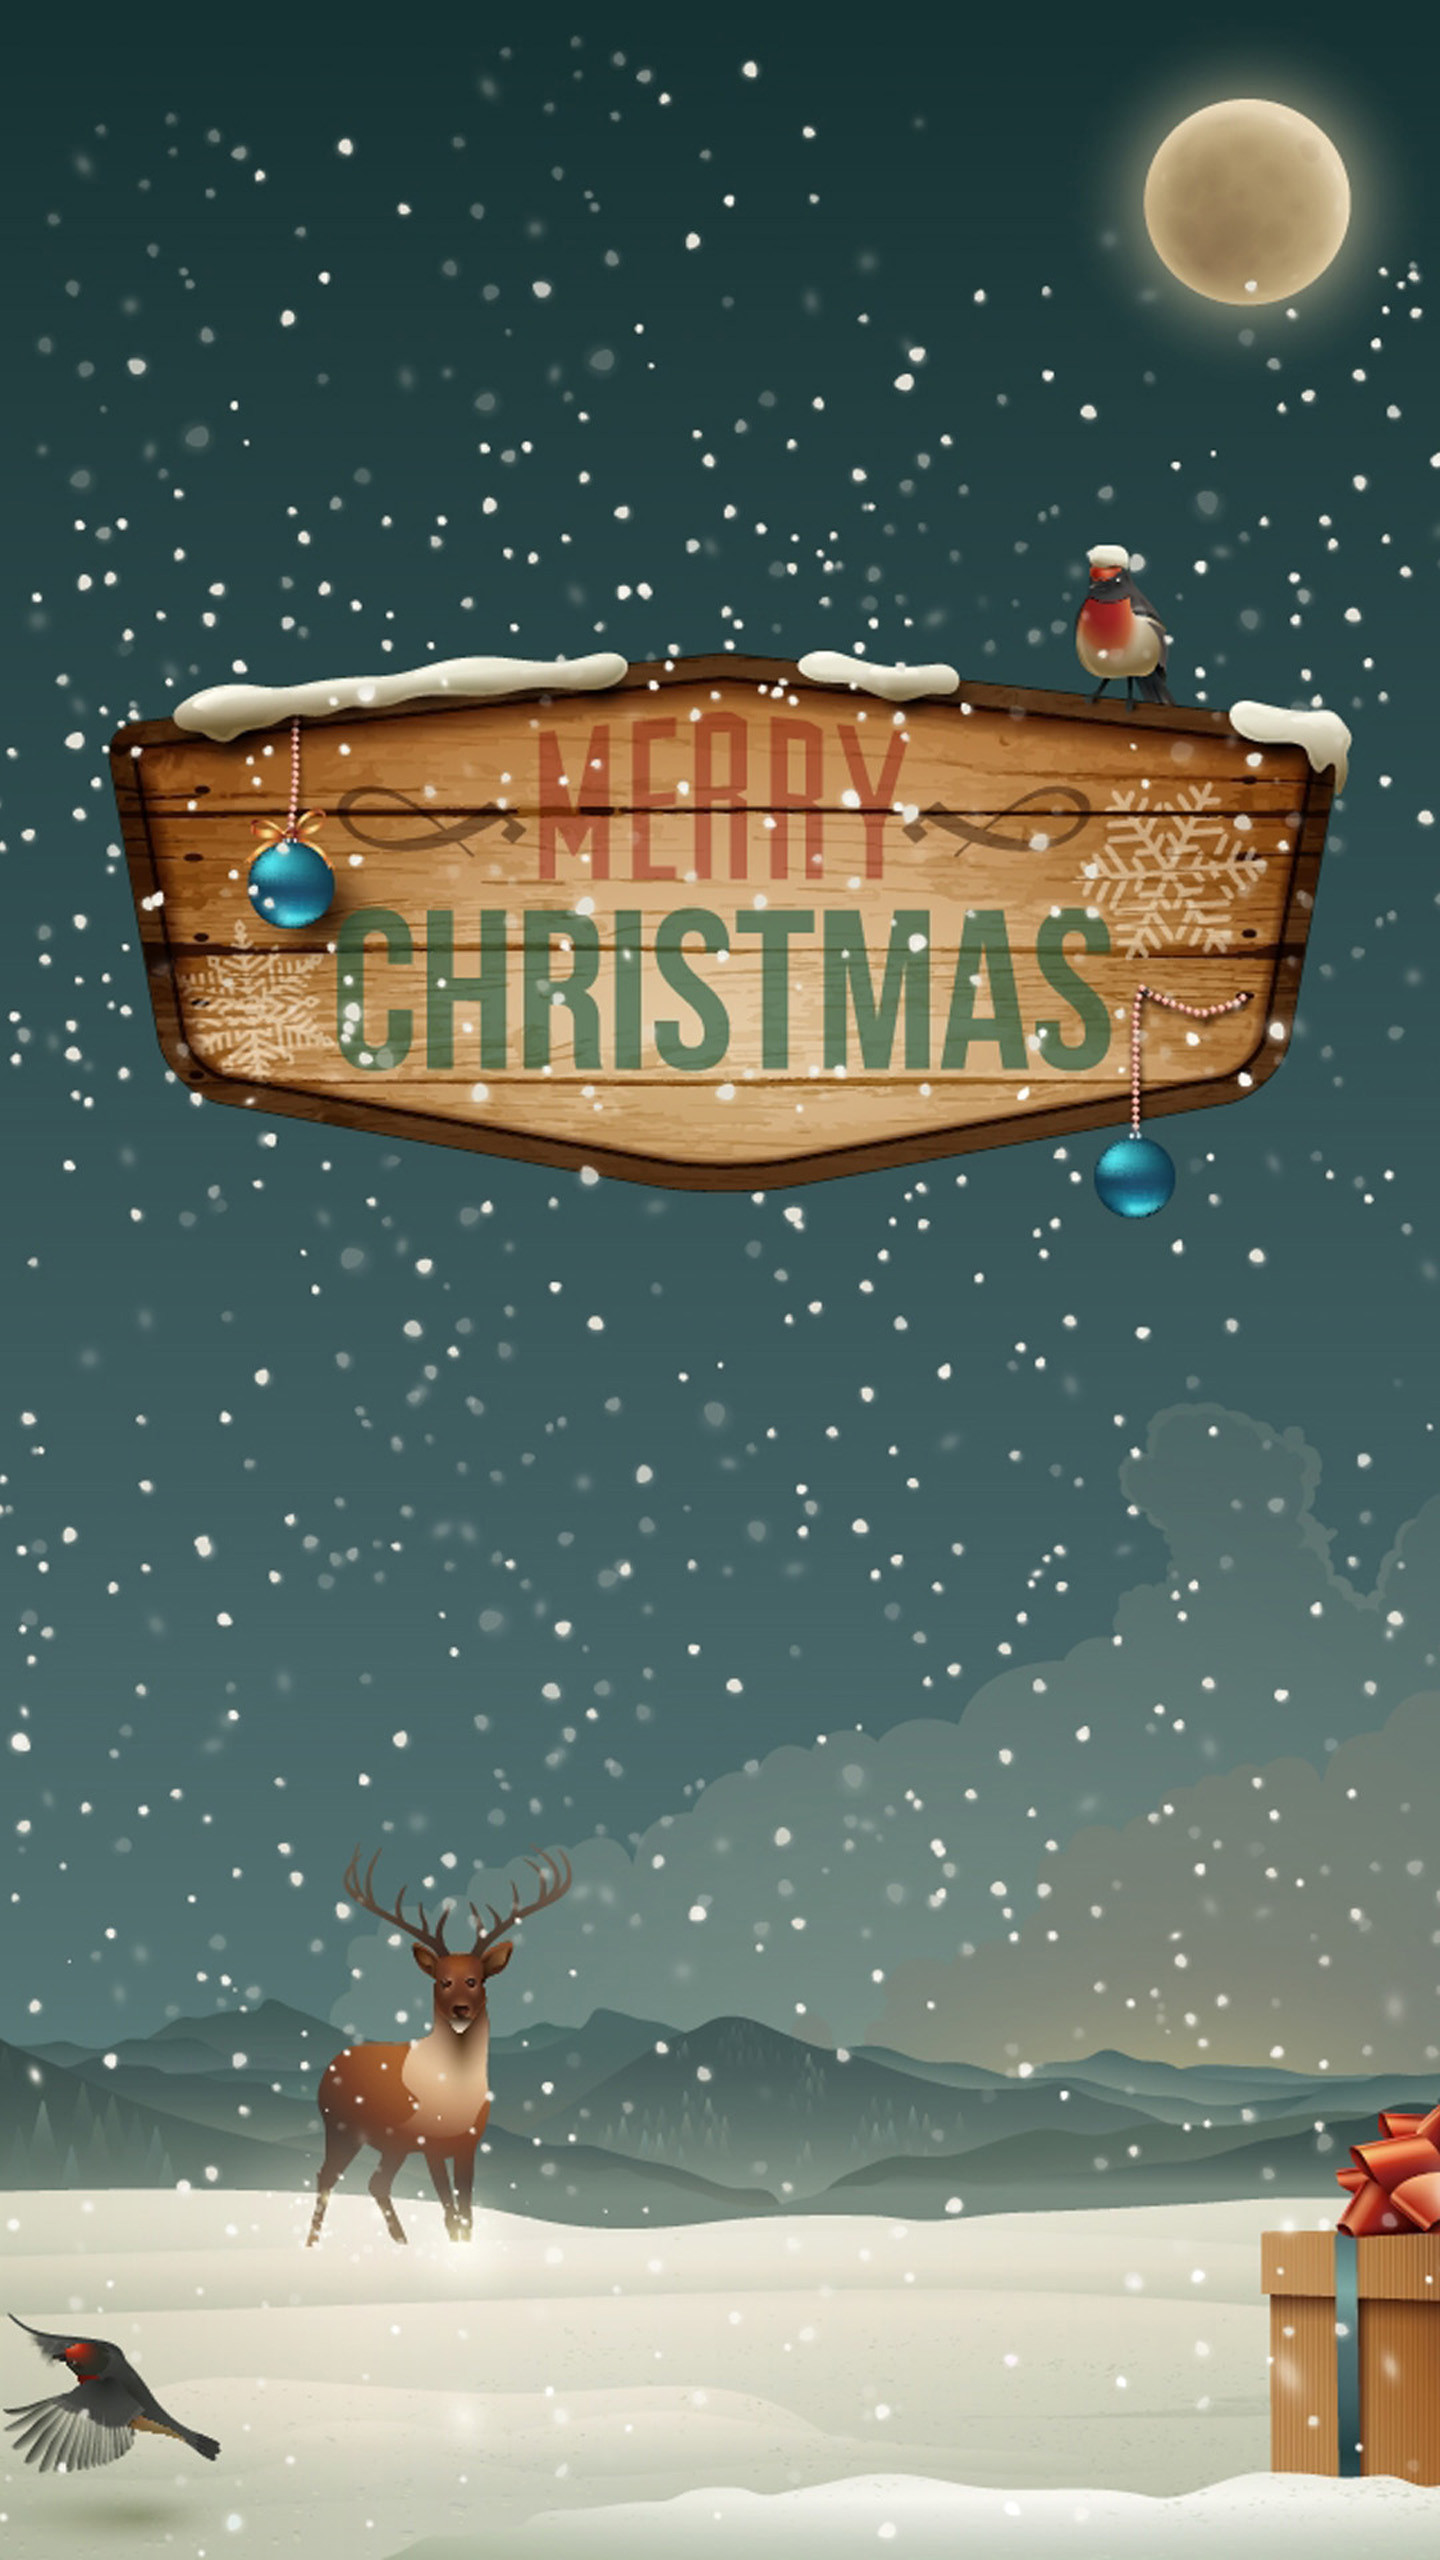 1440x2560 Merry Christmas 2 LG G3 Wallpapers